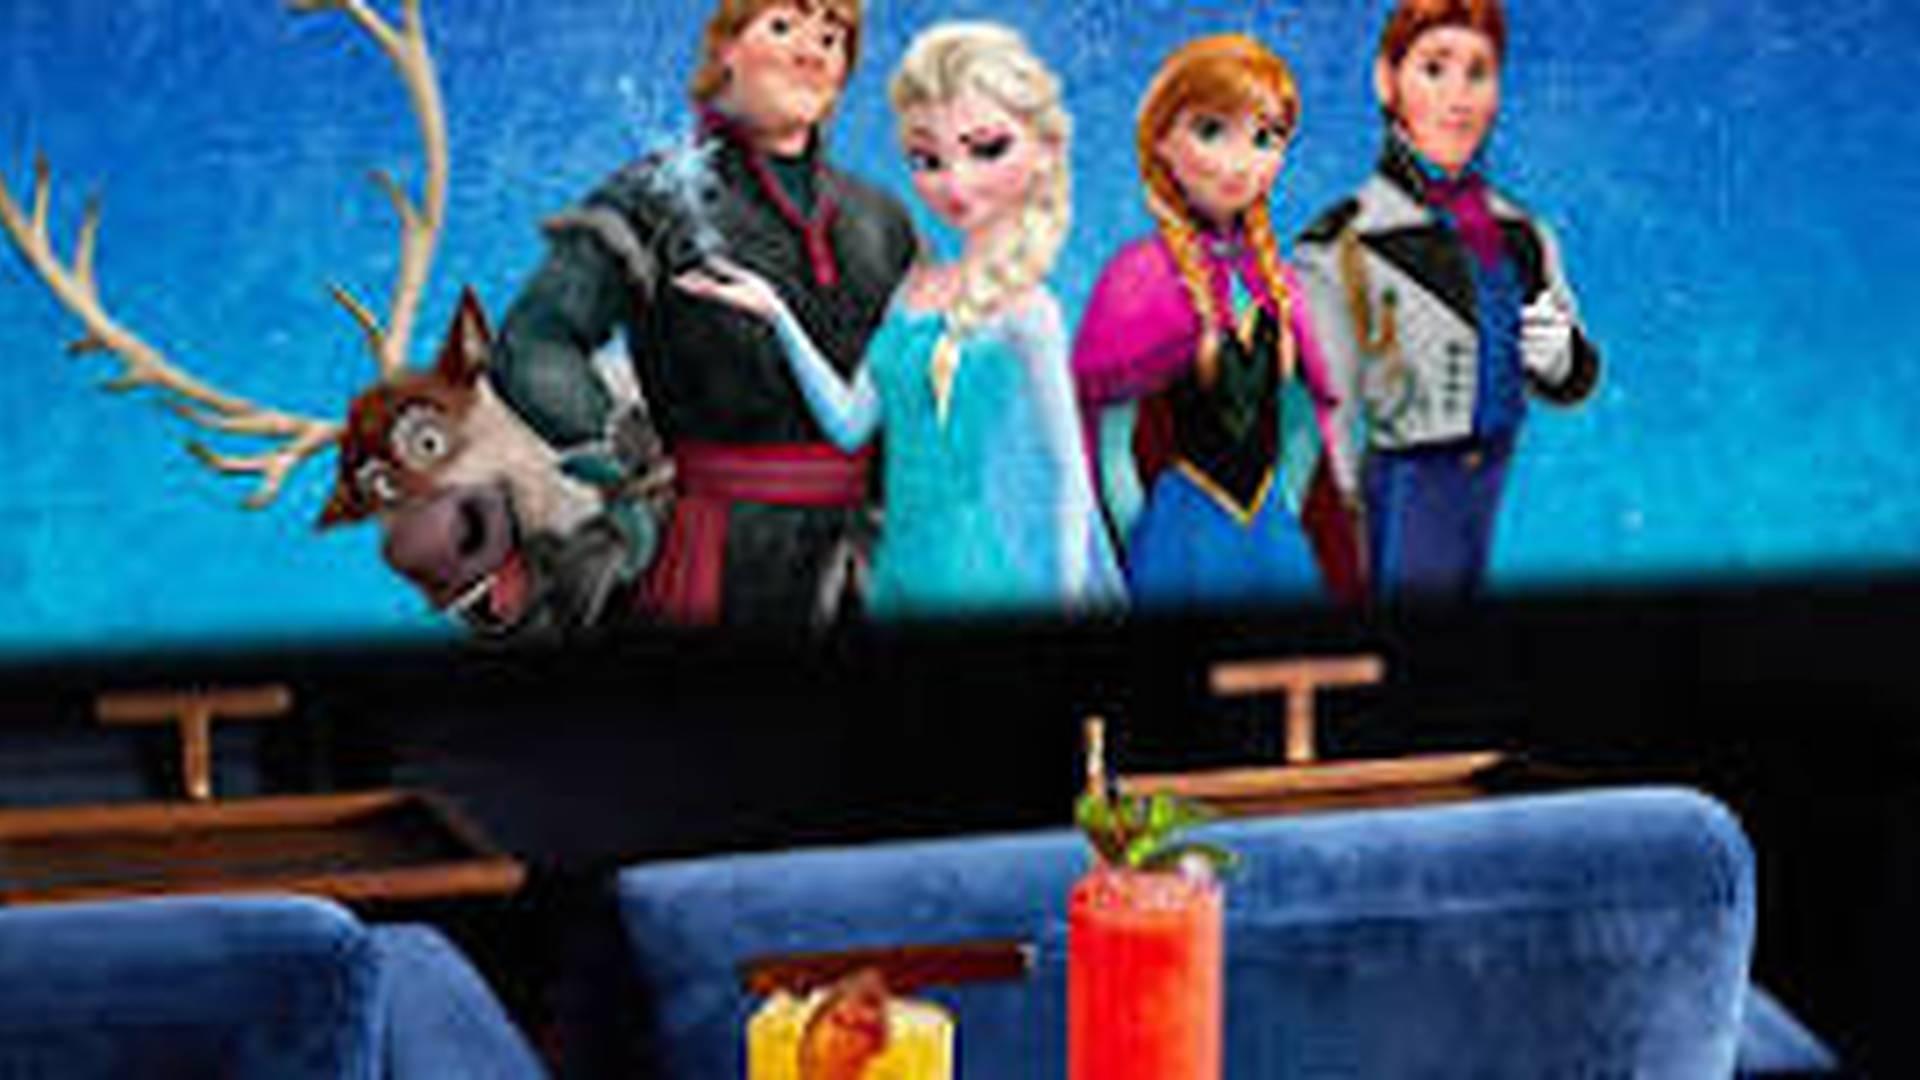 Frozen (2013) / King Street Townhouse Screening Room photo